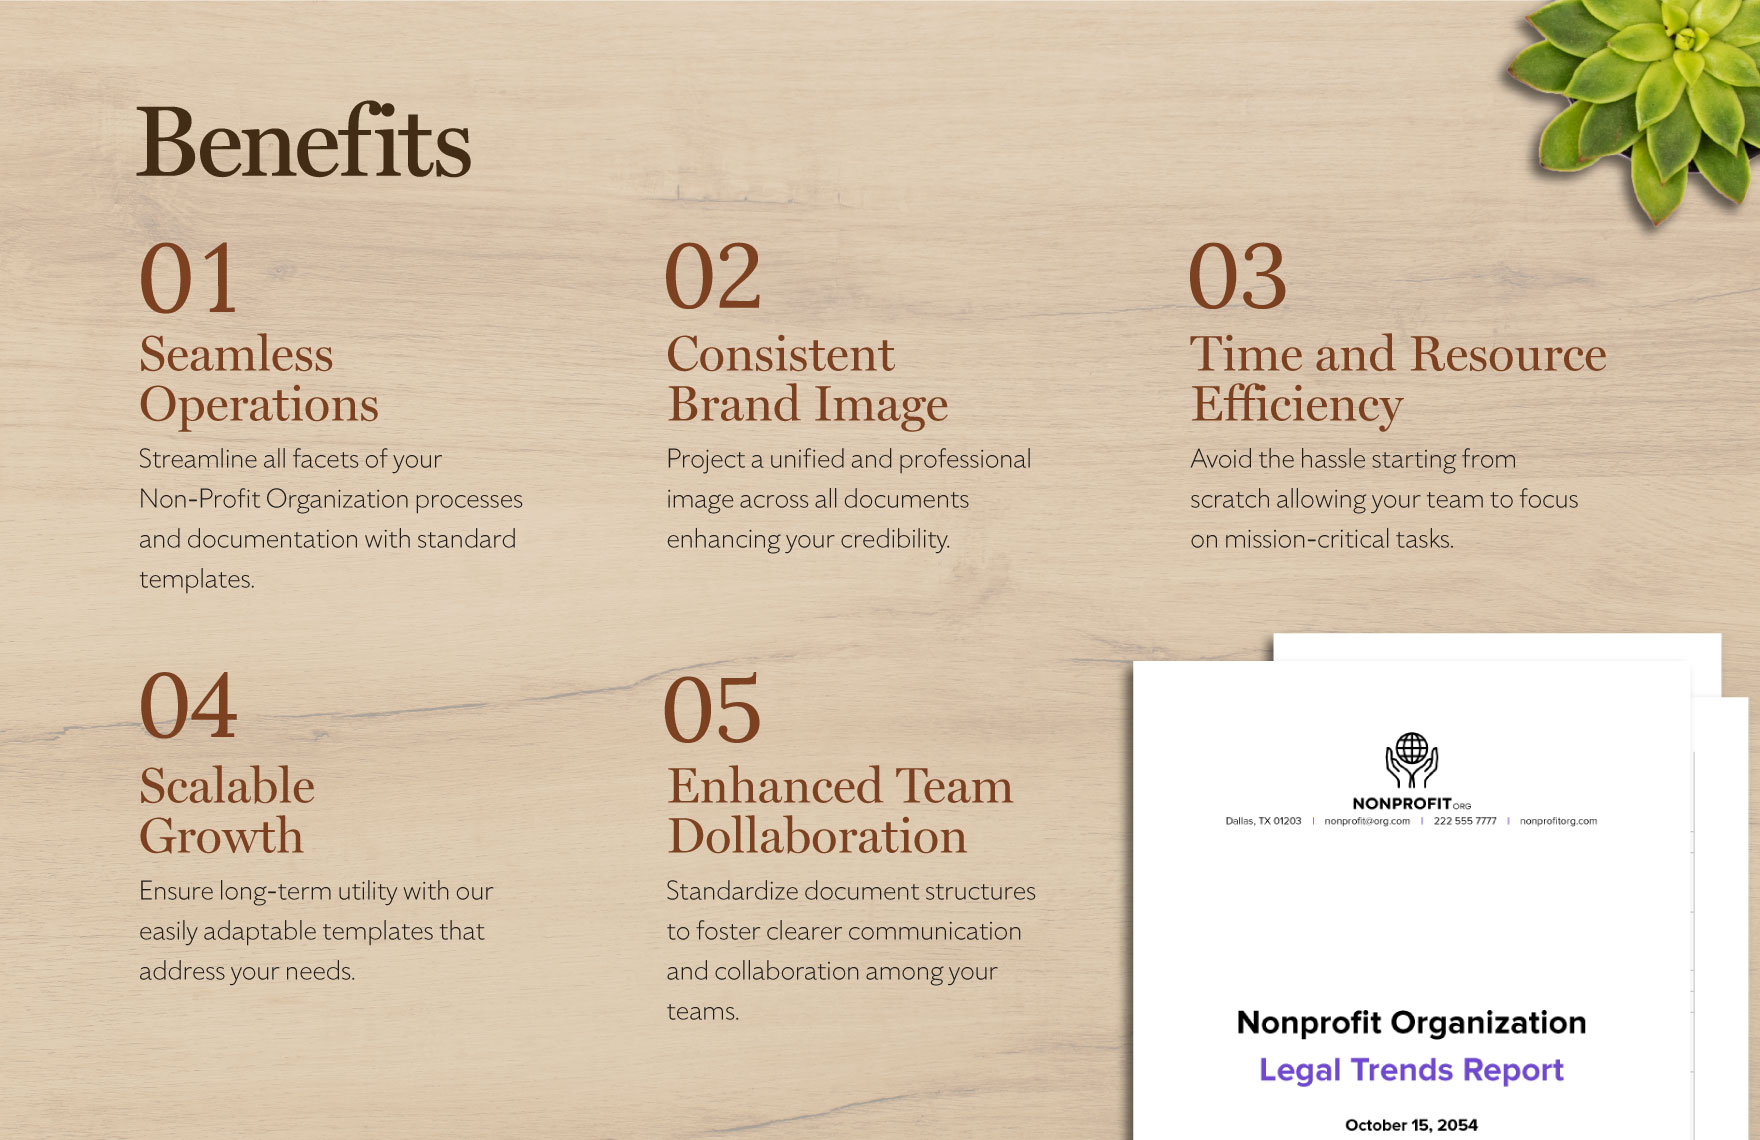 Nonprofit Organization Legal Trends Report Template